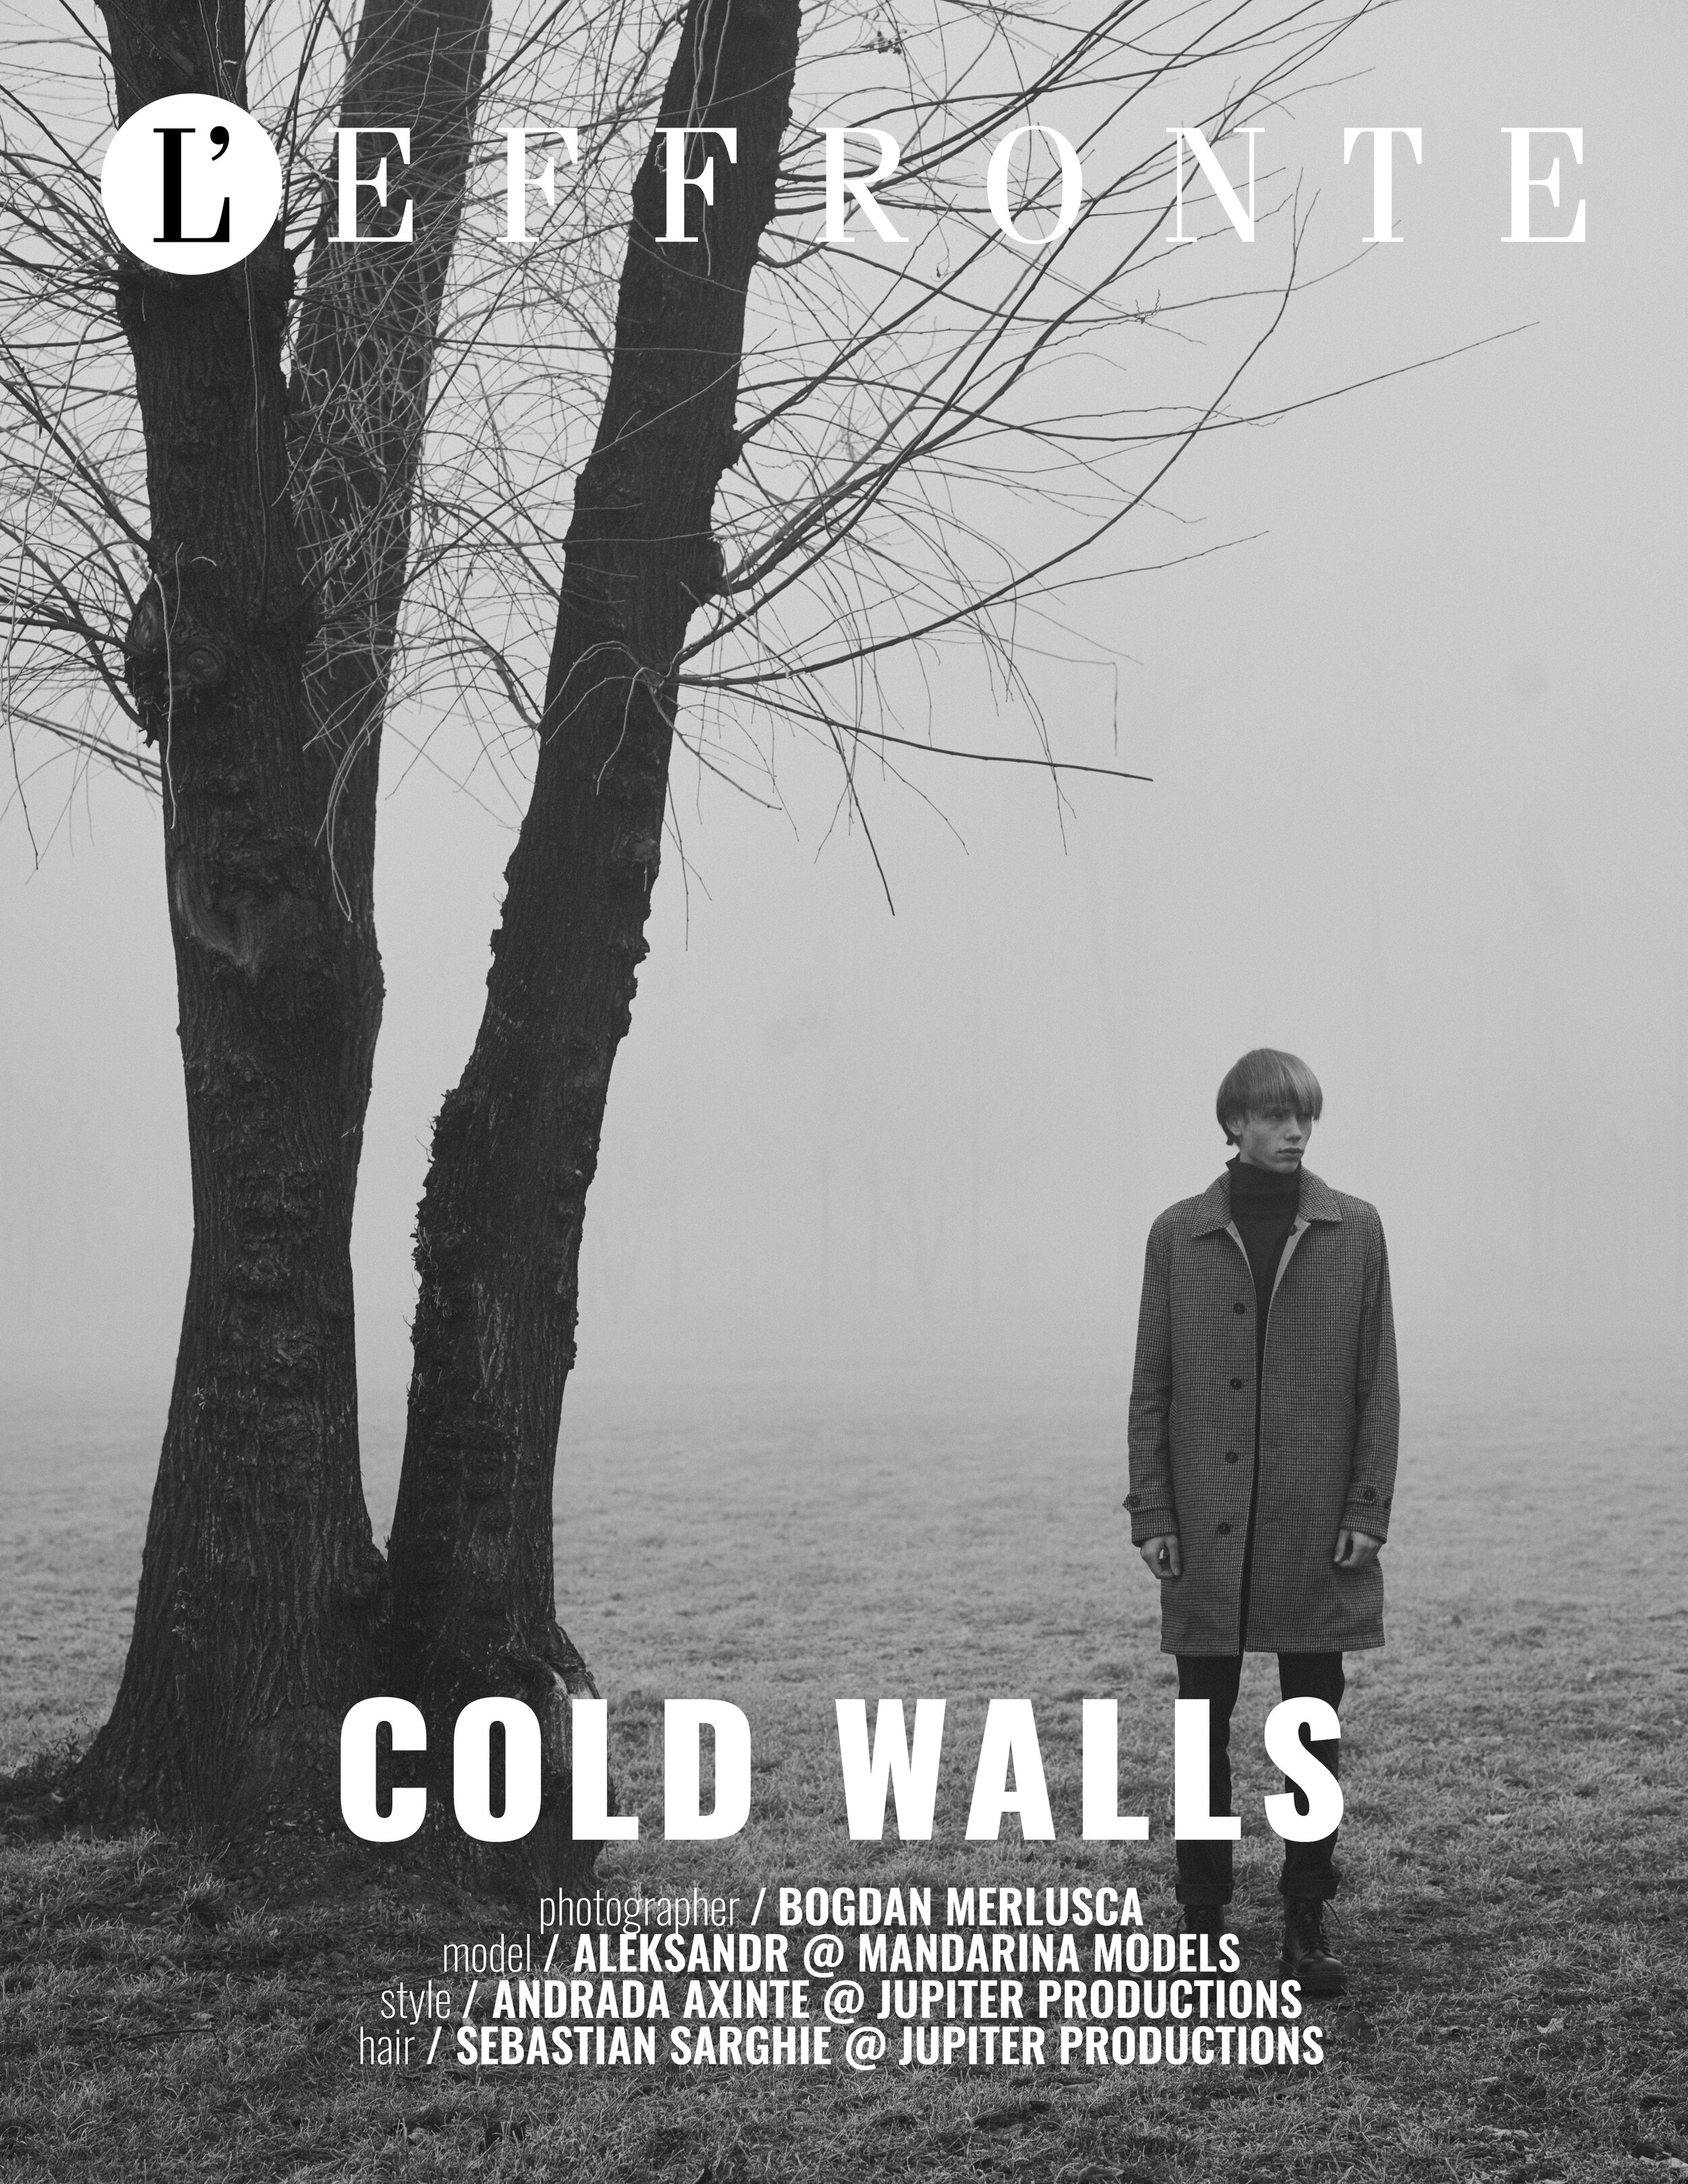 Cold walls (5).jpg